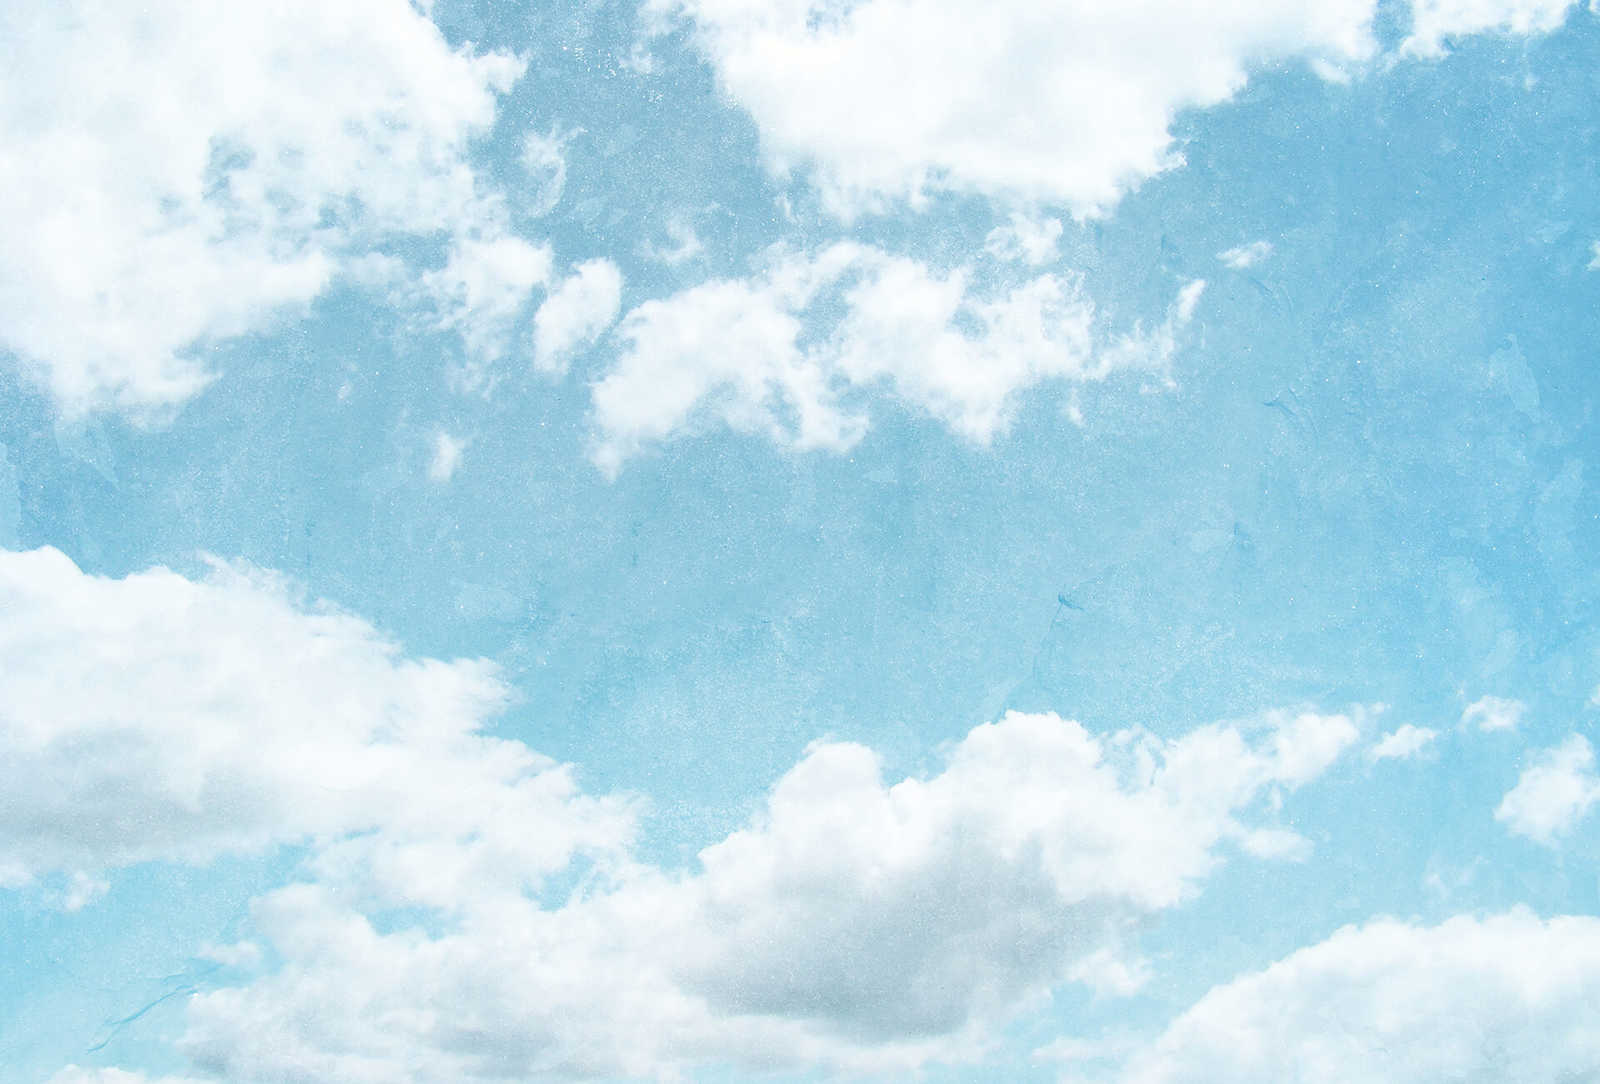         Photo wallpaper cloudy sky - blue, white
    